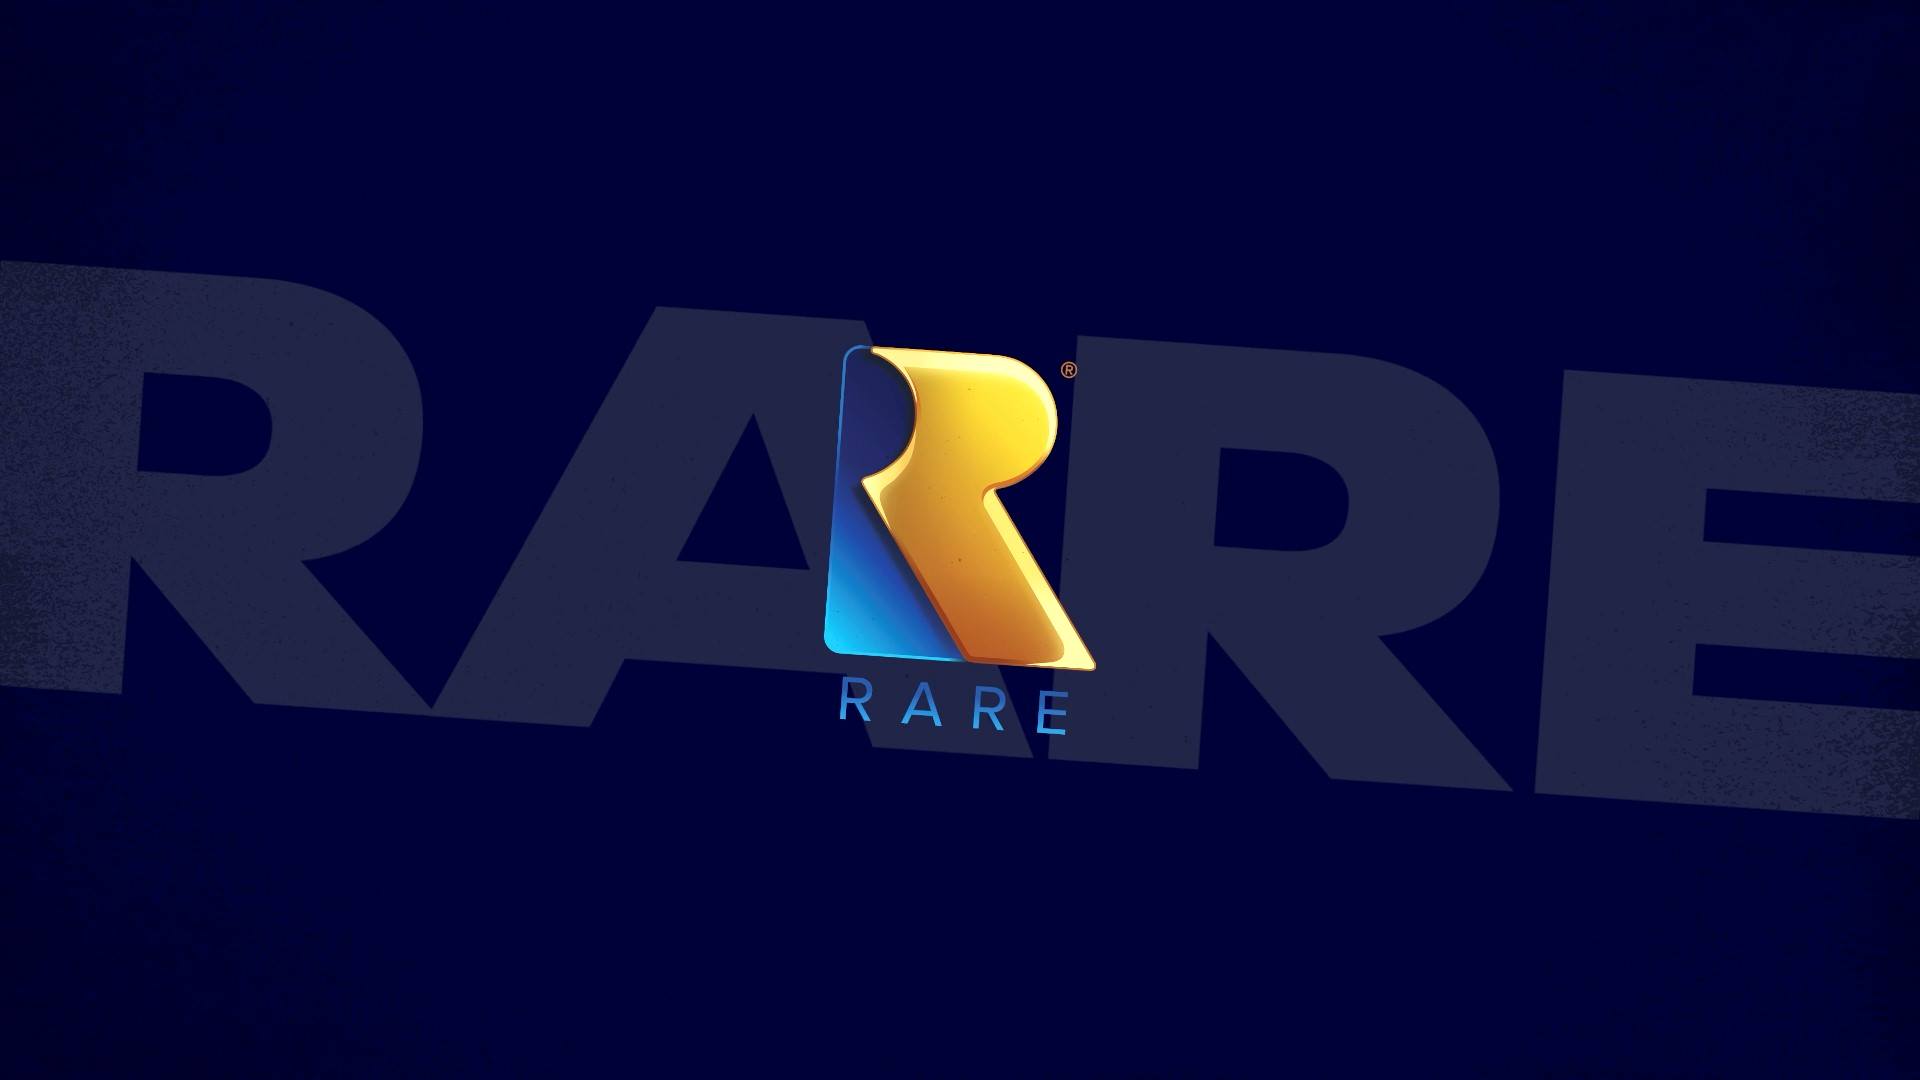 Rare Limited: A British Video Game Developer